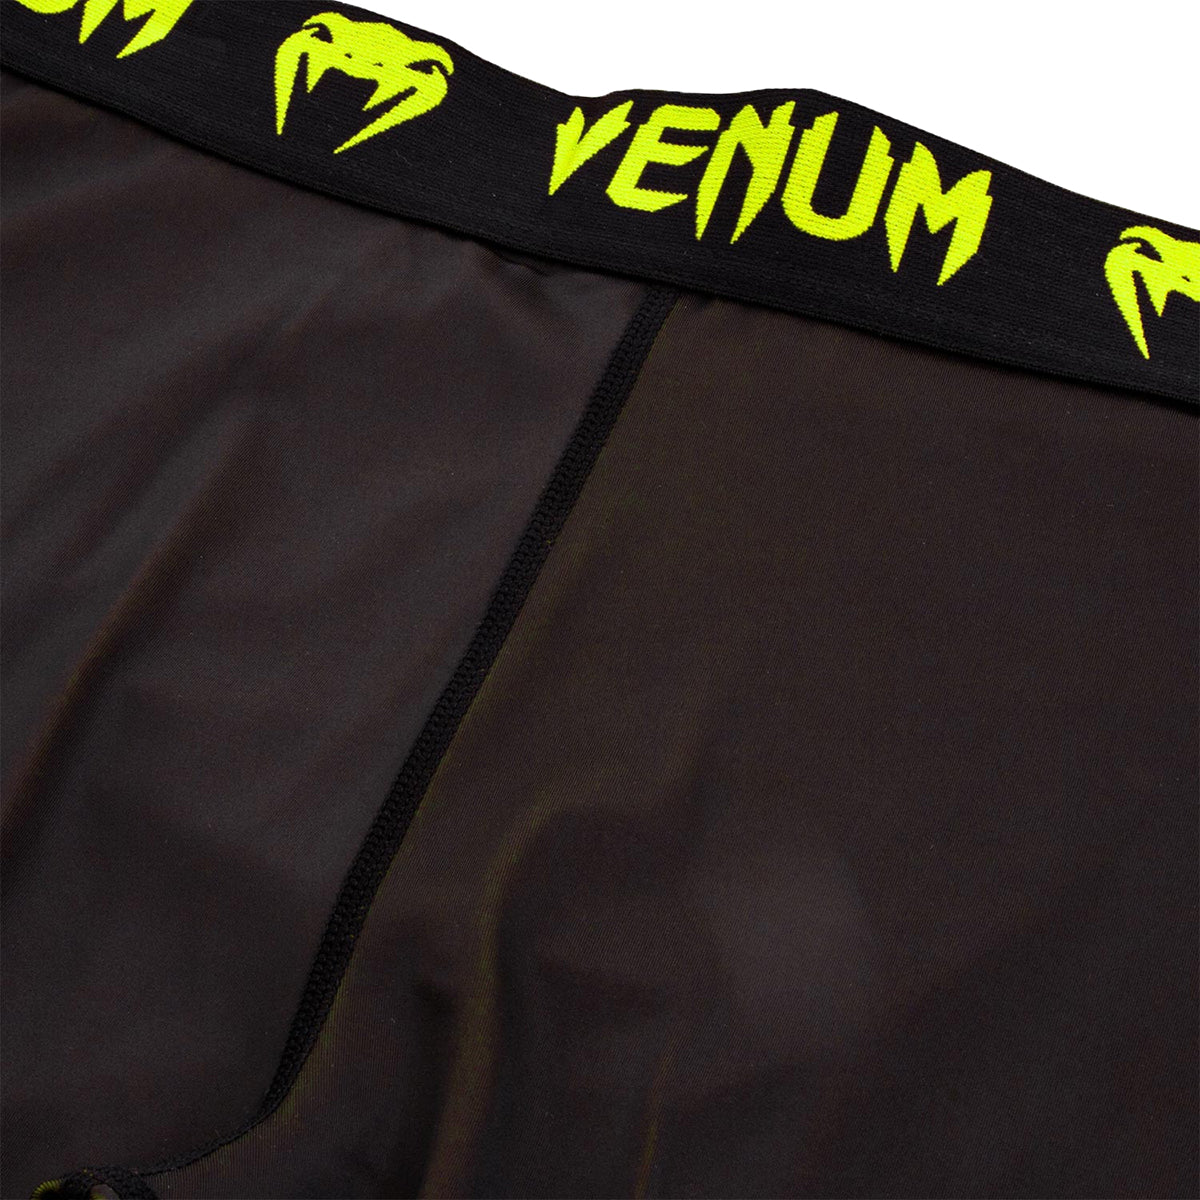 Venum Giant Dry Tech Fit Cut Compression Spats - Black/Neo Yellow Venum